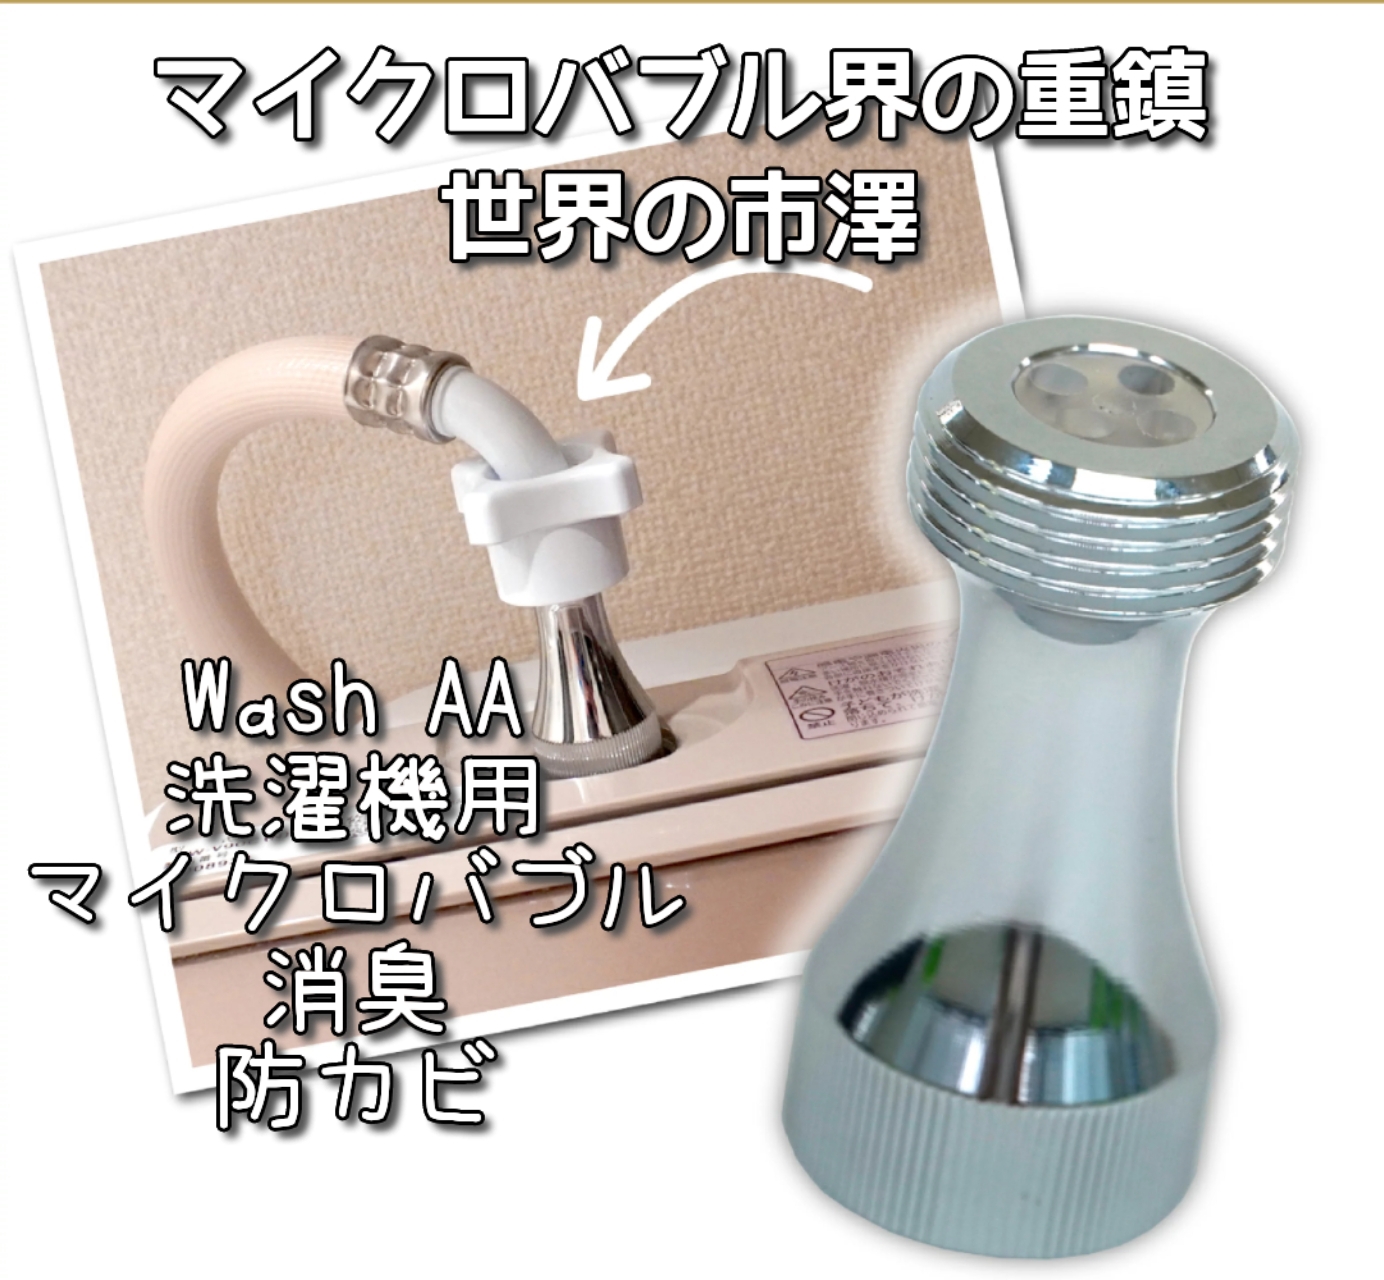 micro-bub(マイクロバブ) ミクロの泡で快適シャワーとお洗濯 ShowerAA WashAA お買い得な限定セット 